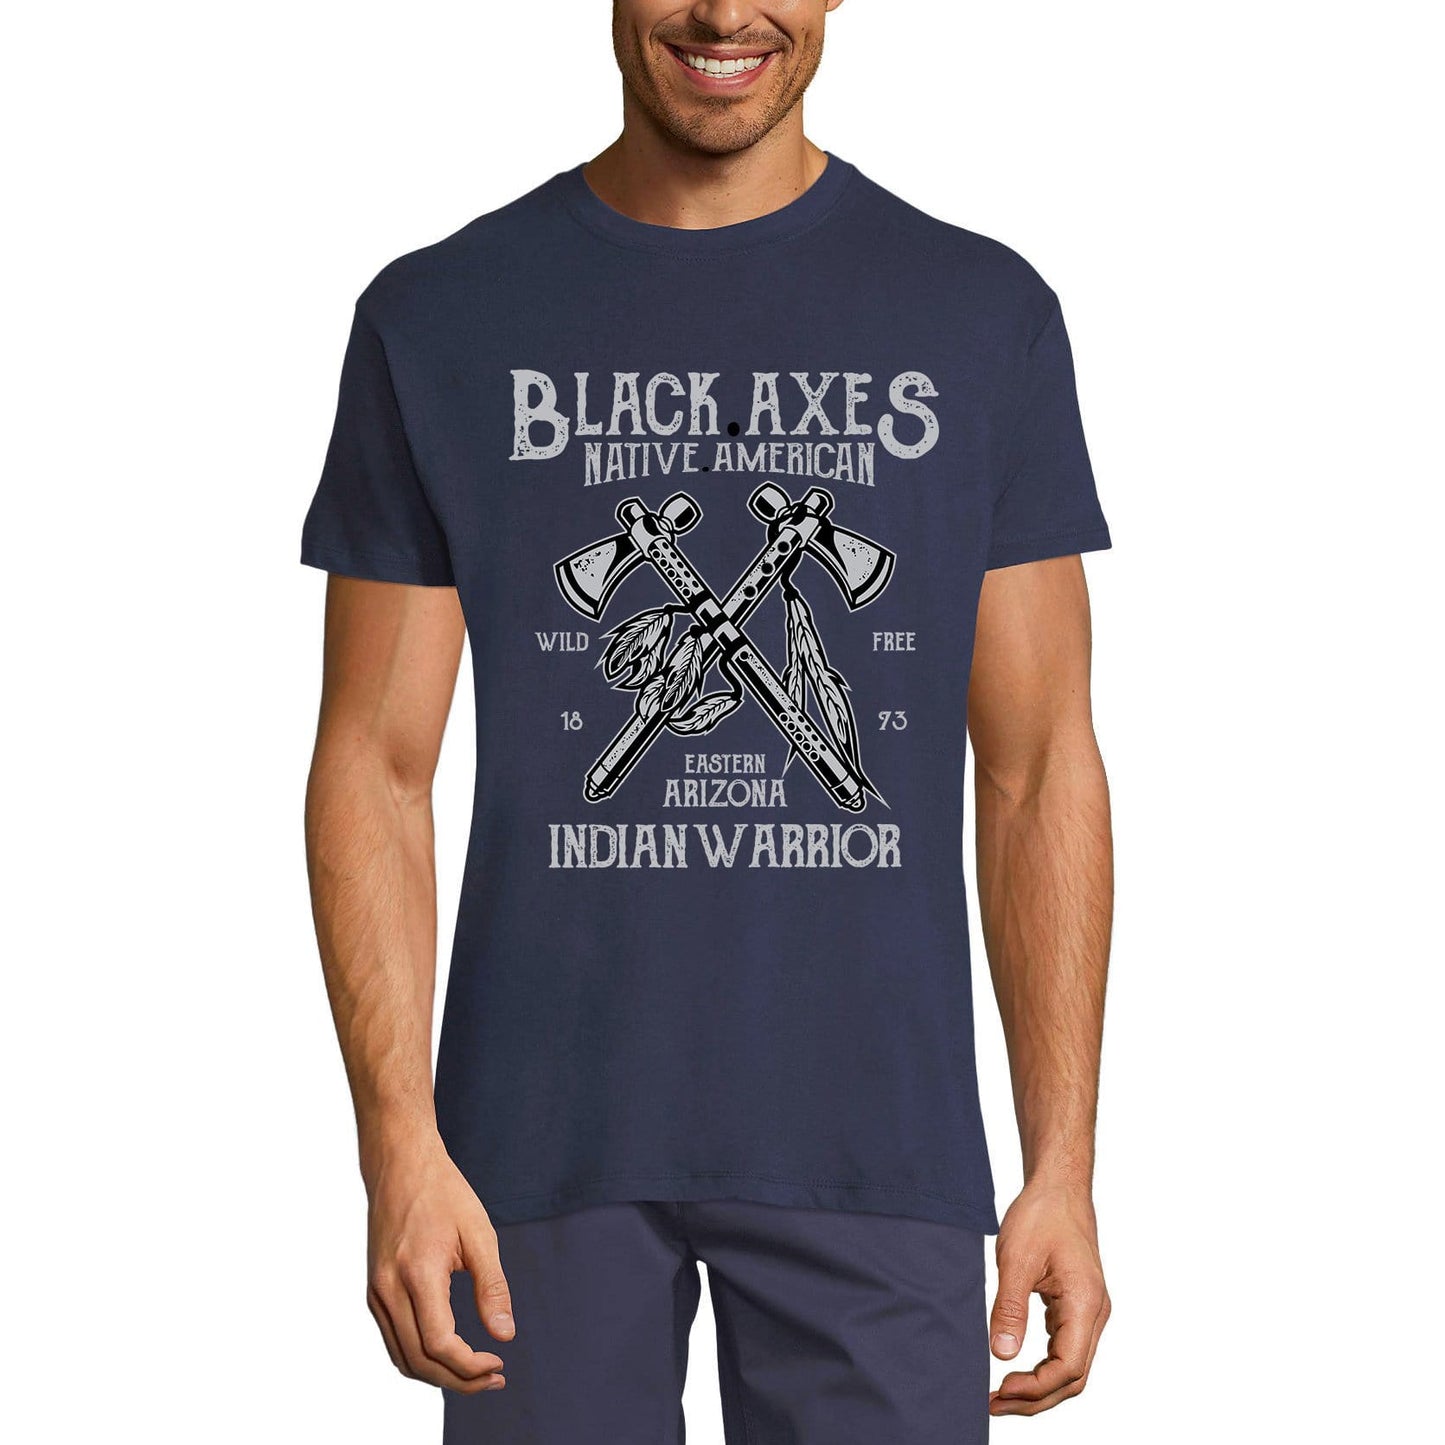 ULTRABASIC Men's T-Shirt Native American Black Axes - Indian Warrior Shirt for Men